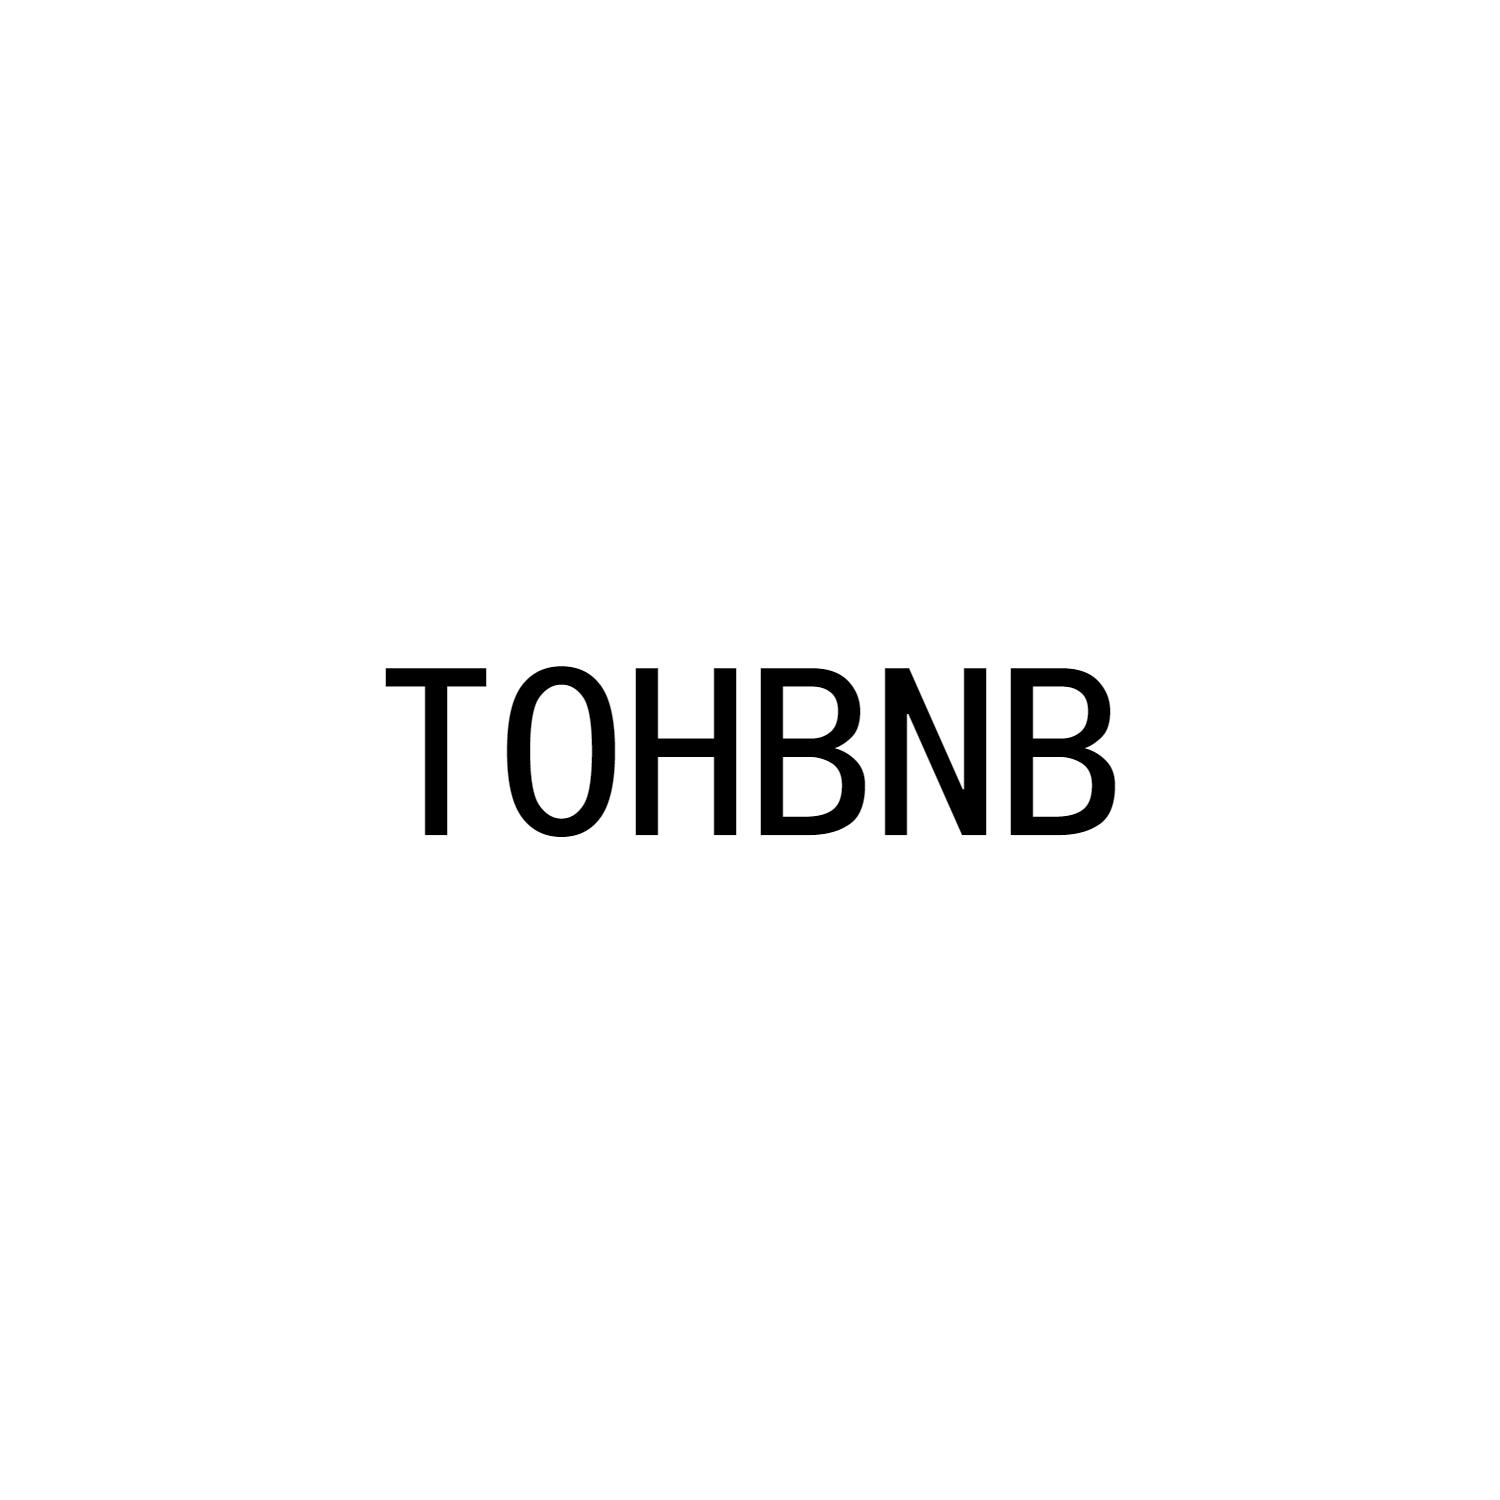 TOHBNB